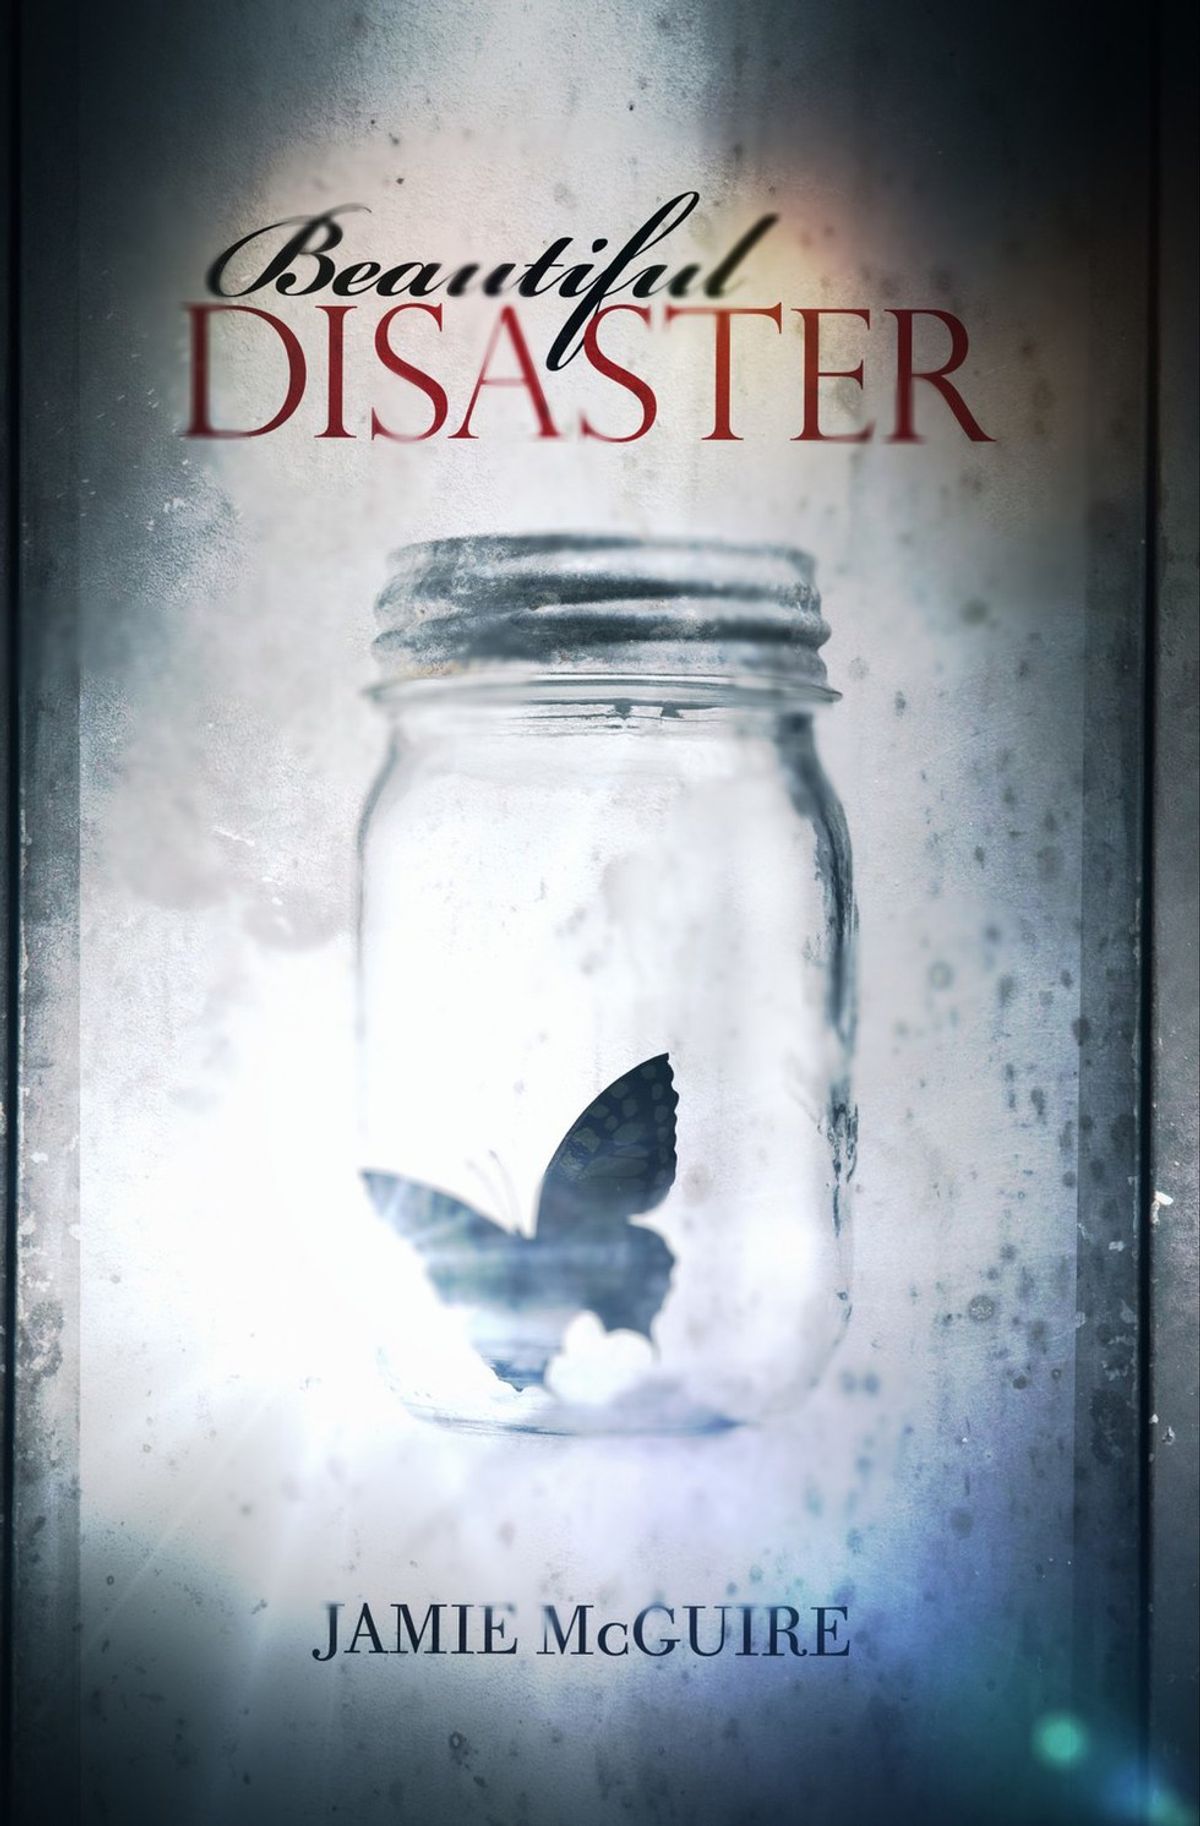 'Beautiful Disaster' Book Review